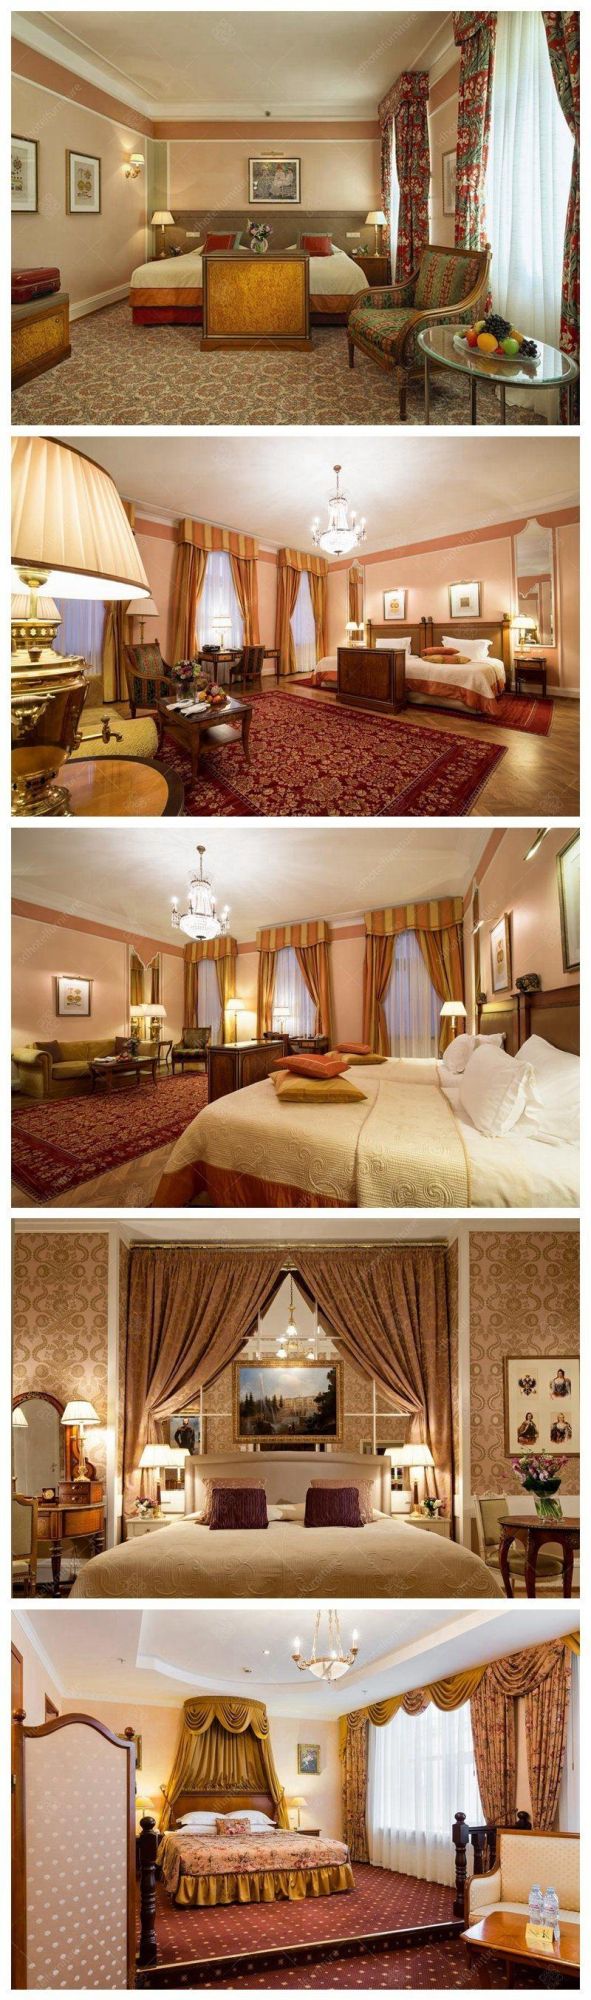 Luxury Design European Style Hotel Bedroom Furniture Sets for Sale